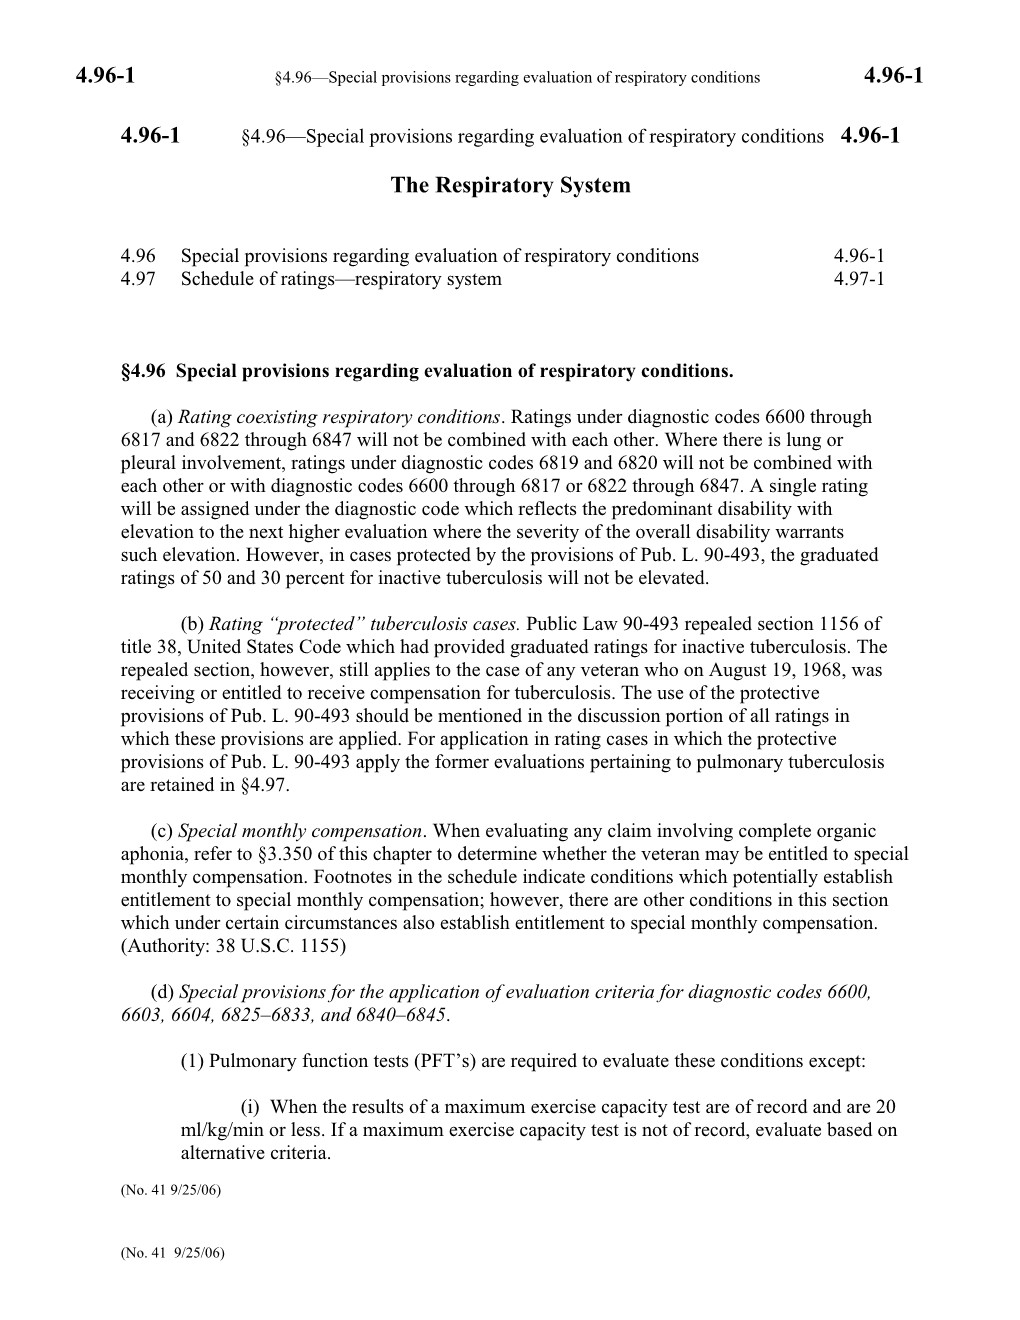 4.96-XXX 4.96 Special Provisions Regarding Evaluation of Respiratory Conditions 4.96-XXX